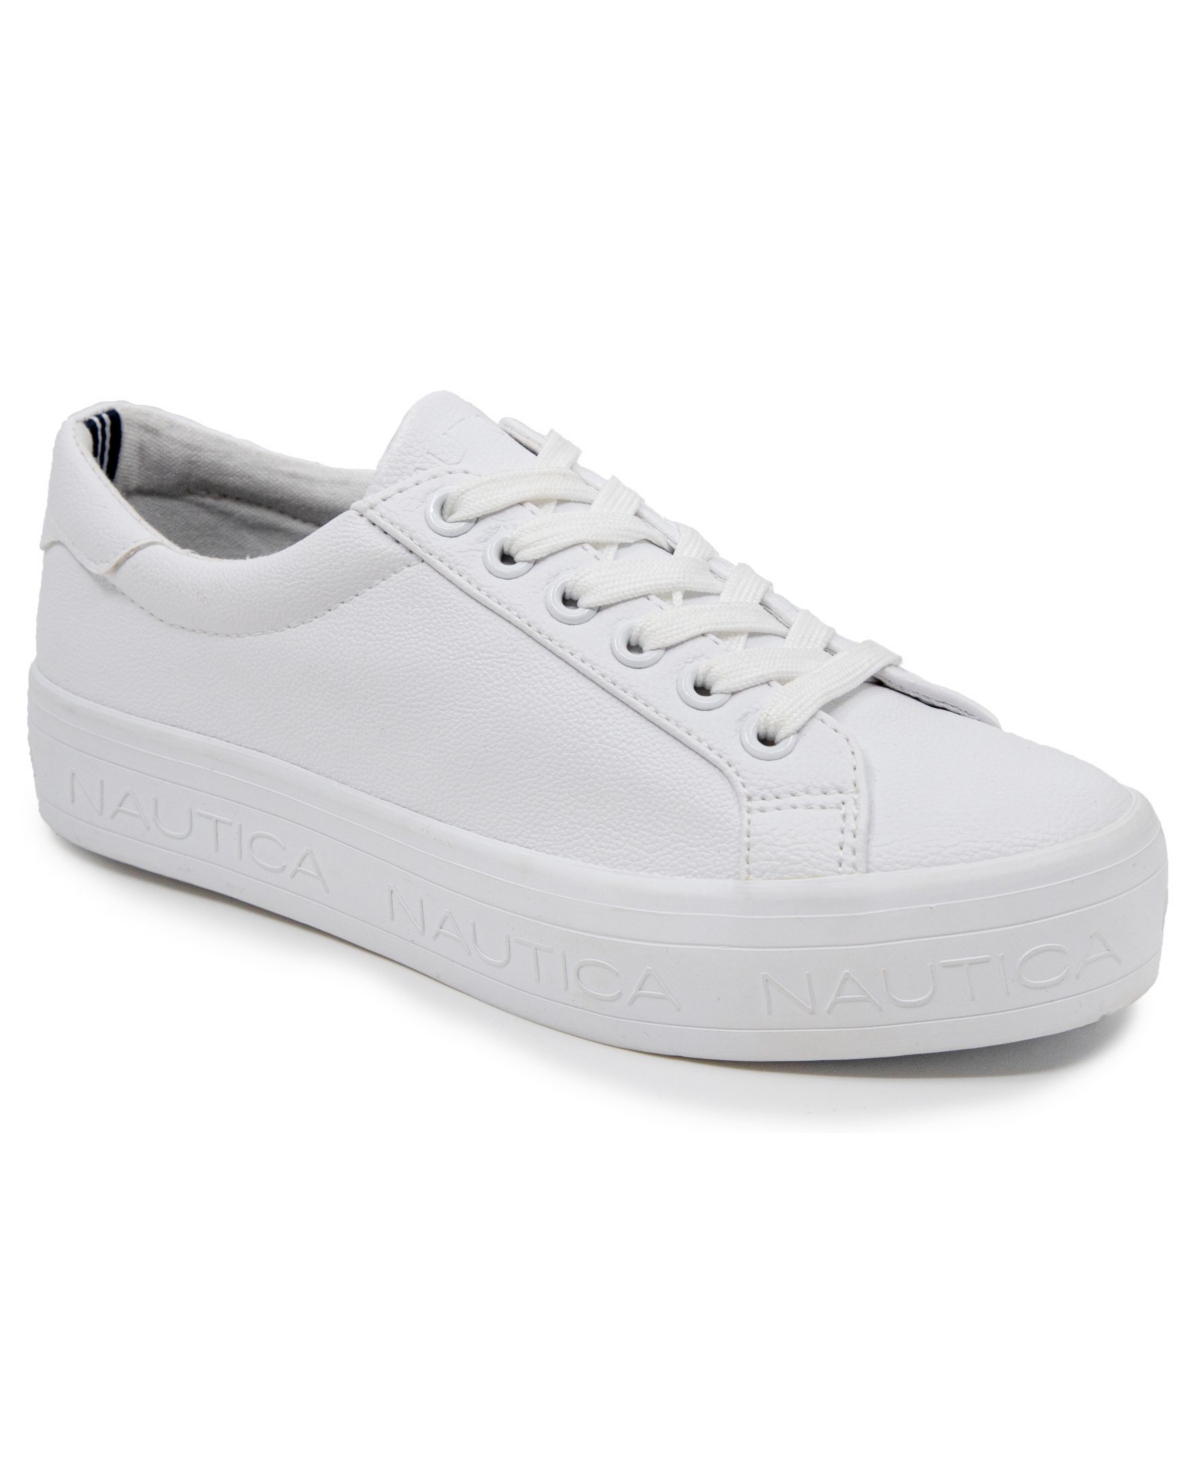 Women's Aelisa Platform Sneakers - White